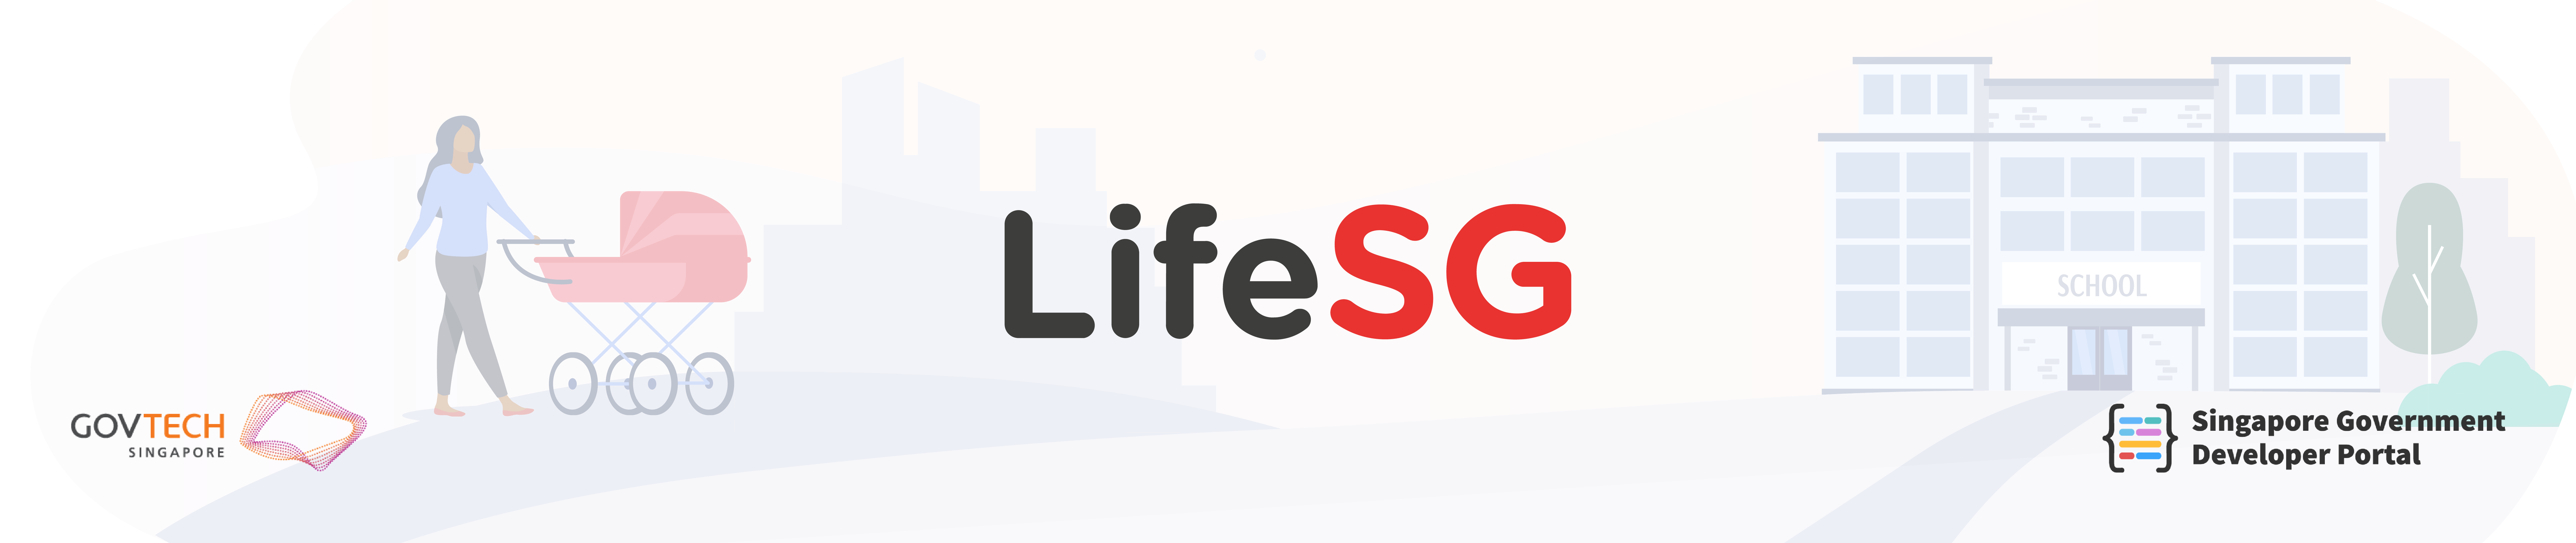 LifeSG header banner for Singapore Government Developer Portal